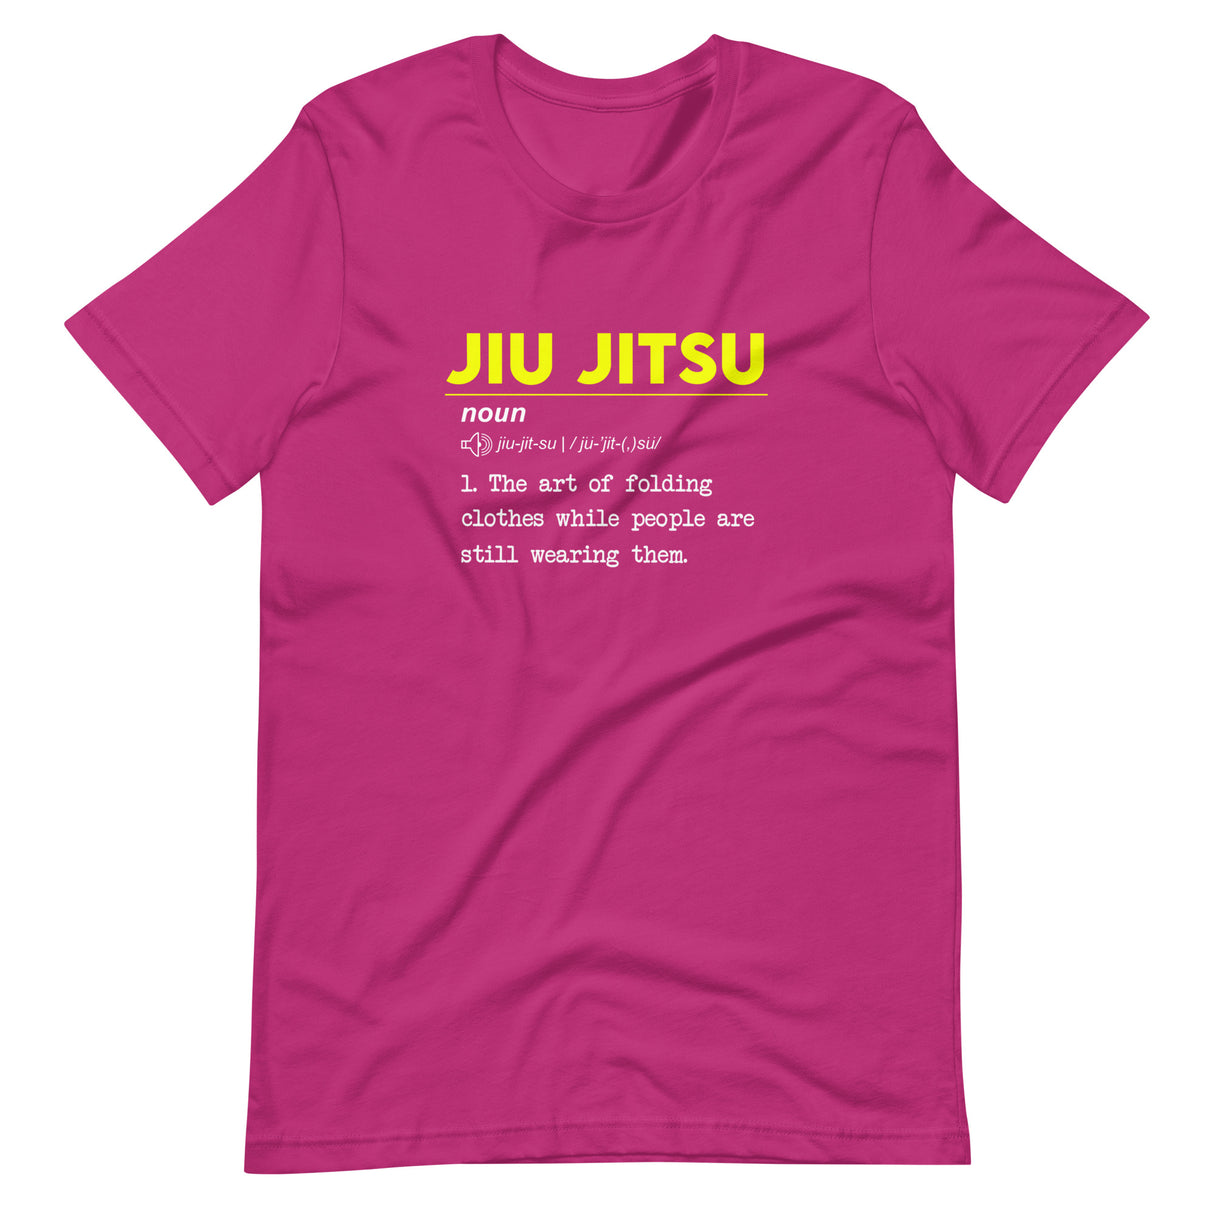 Jiu Jitsu Definition Shirt